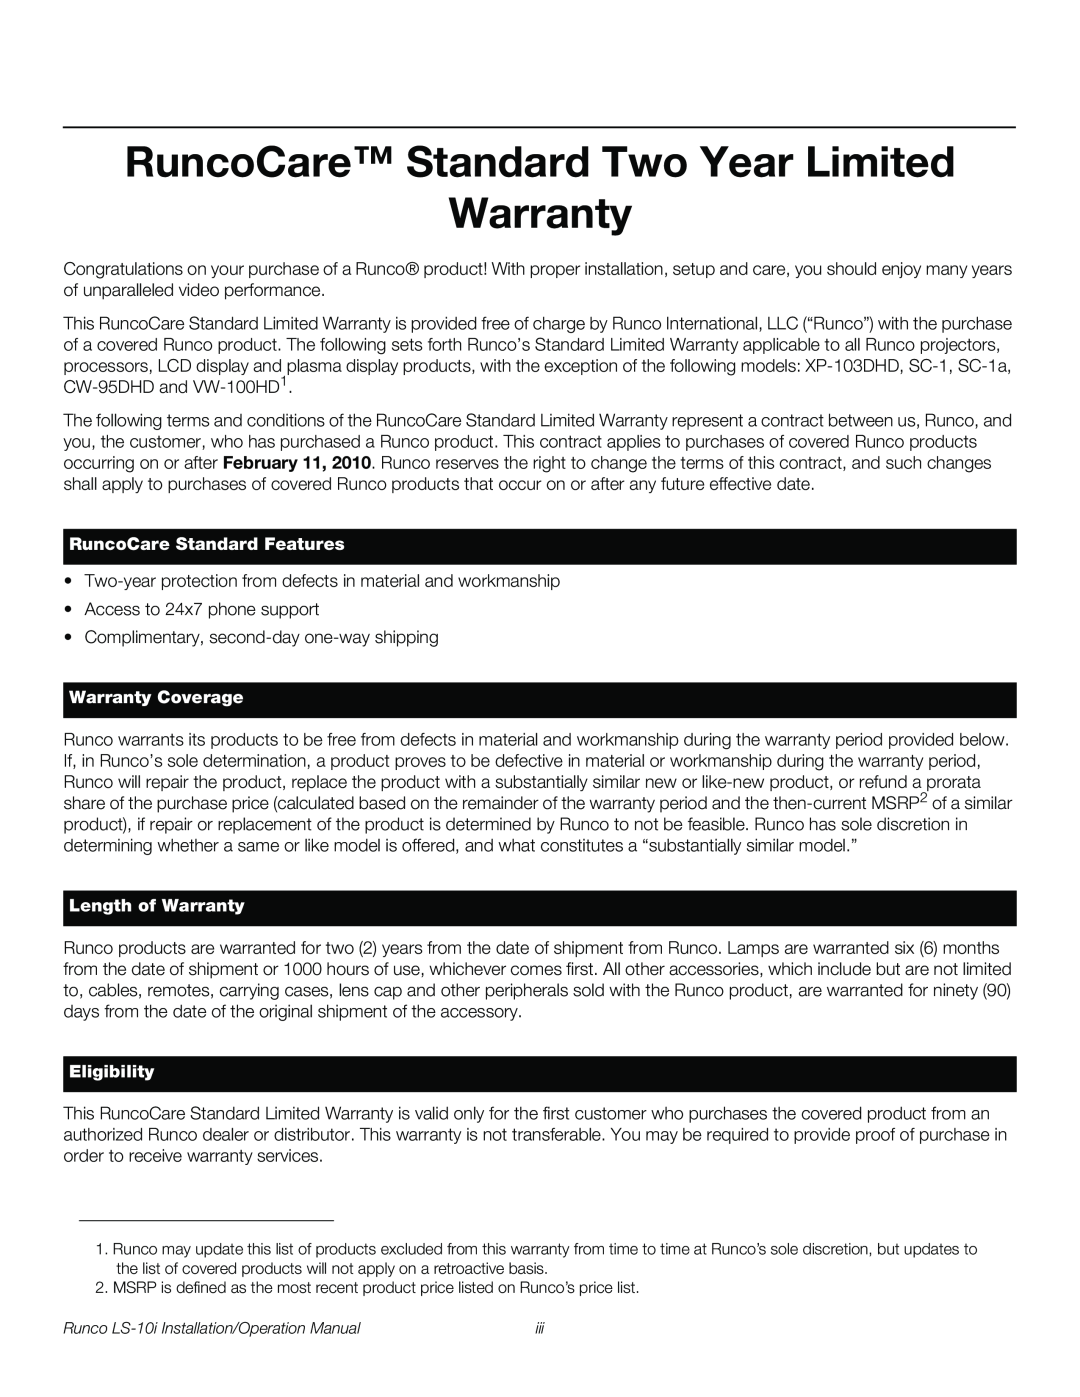 Runco LS-10I RuncoCare Standard Two Year Limited Warranty, RuncoCare Standard Features, Warranty Coverage, Eligibility 